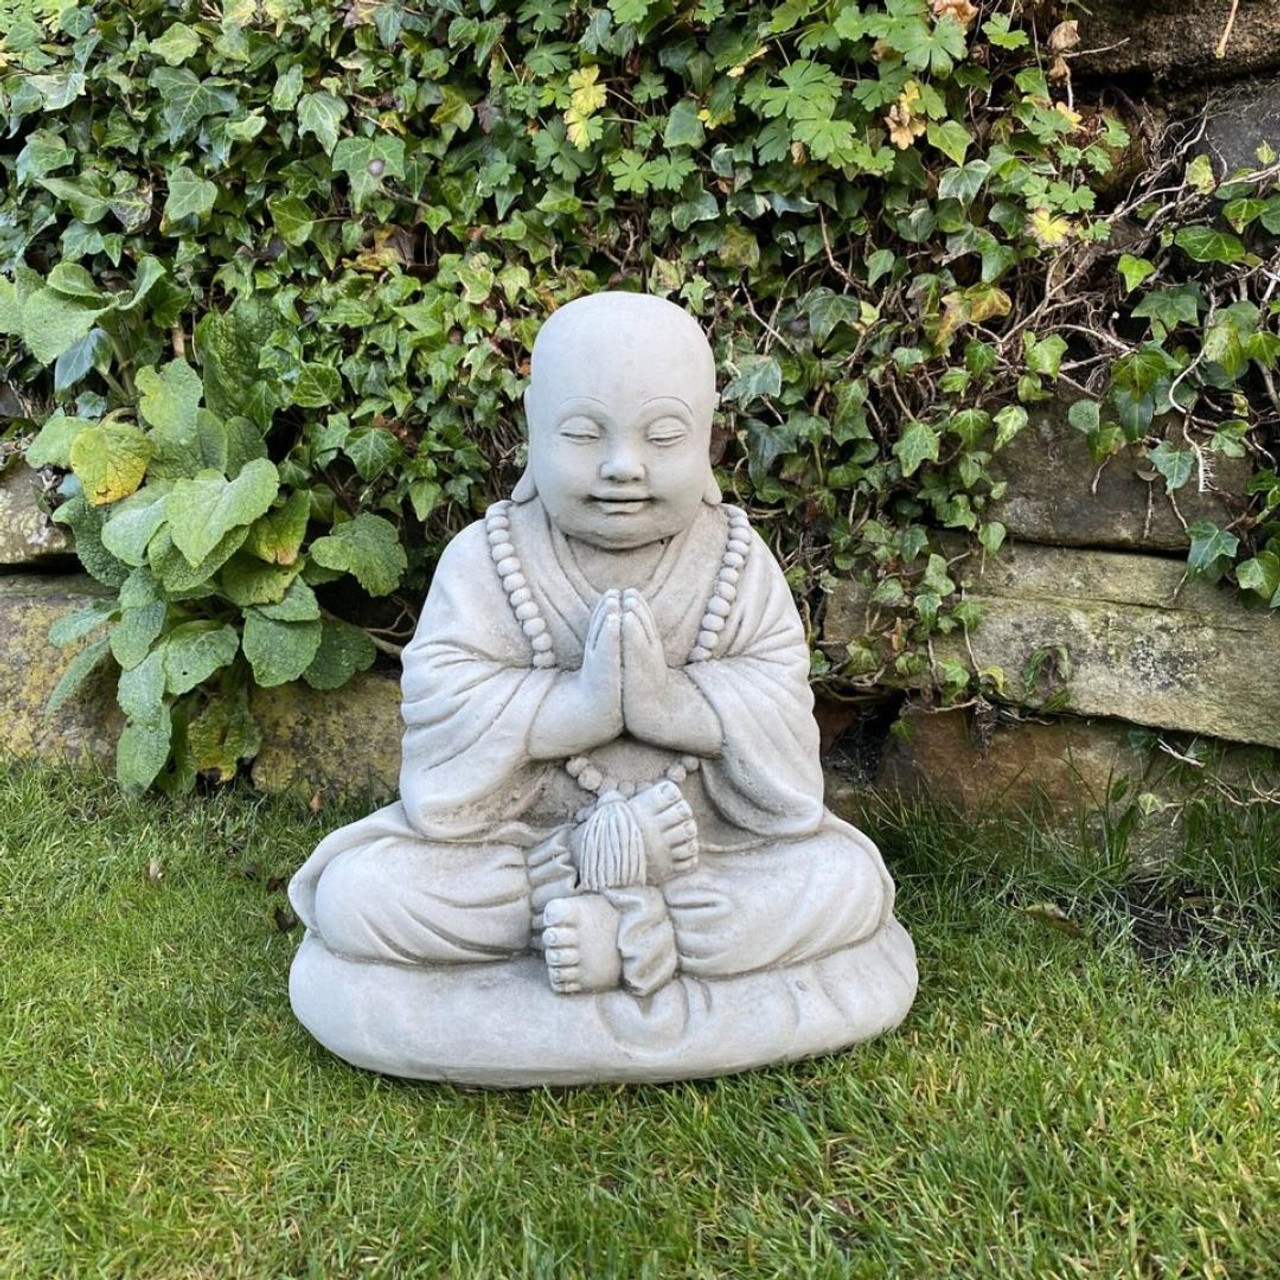 Small Monk on a cushion Garden Ornament